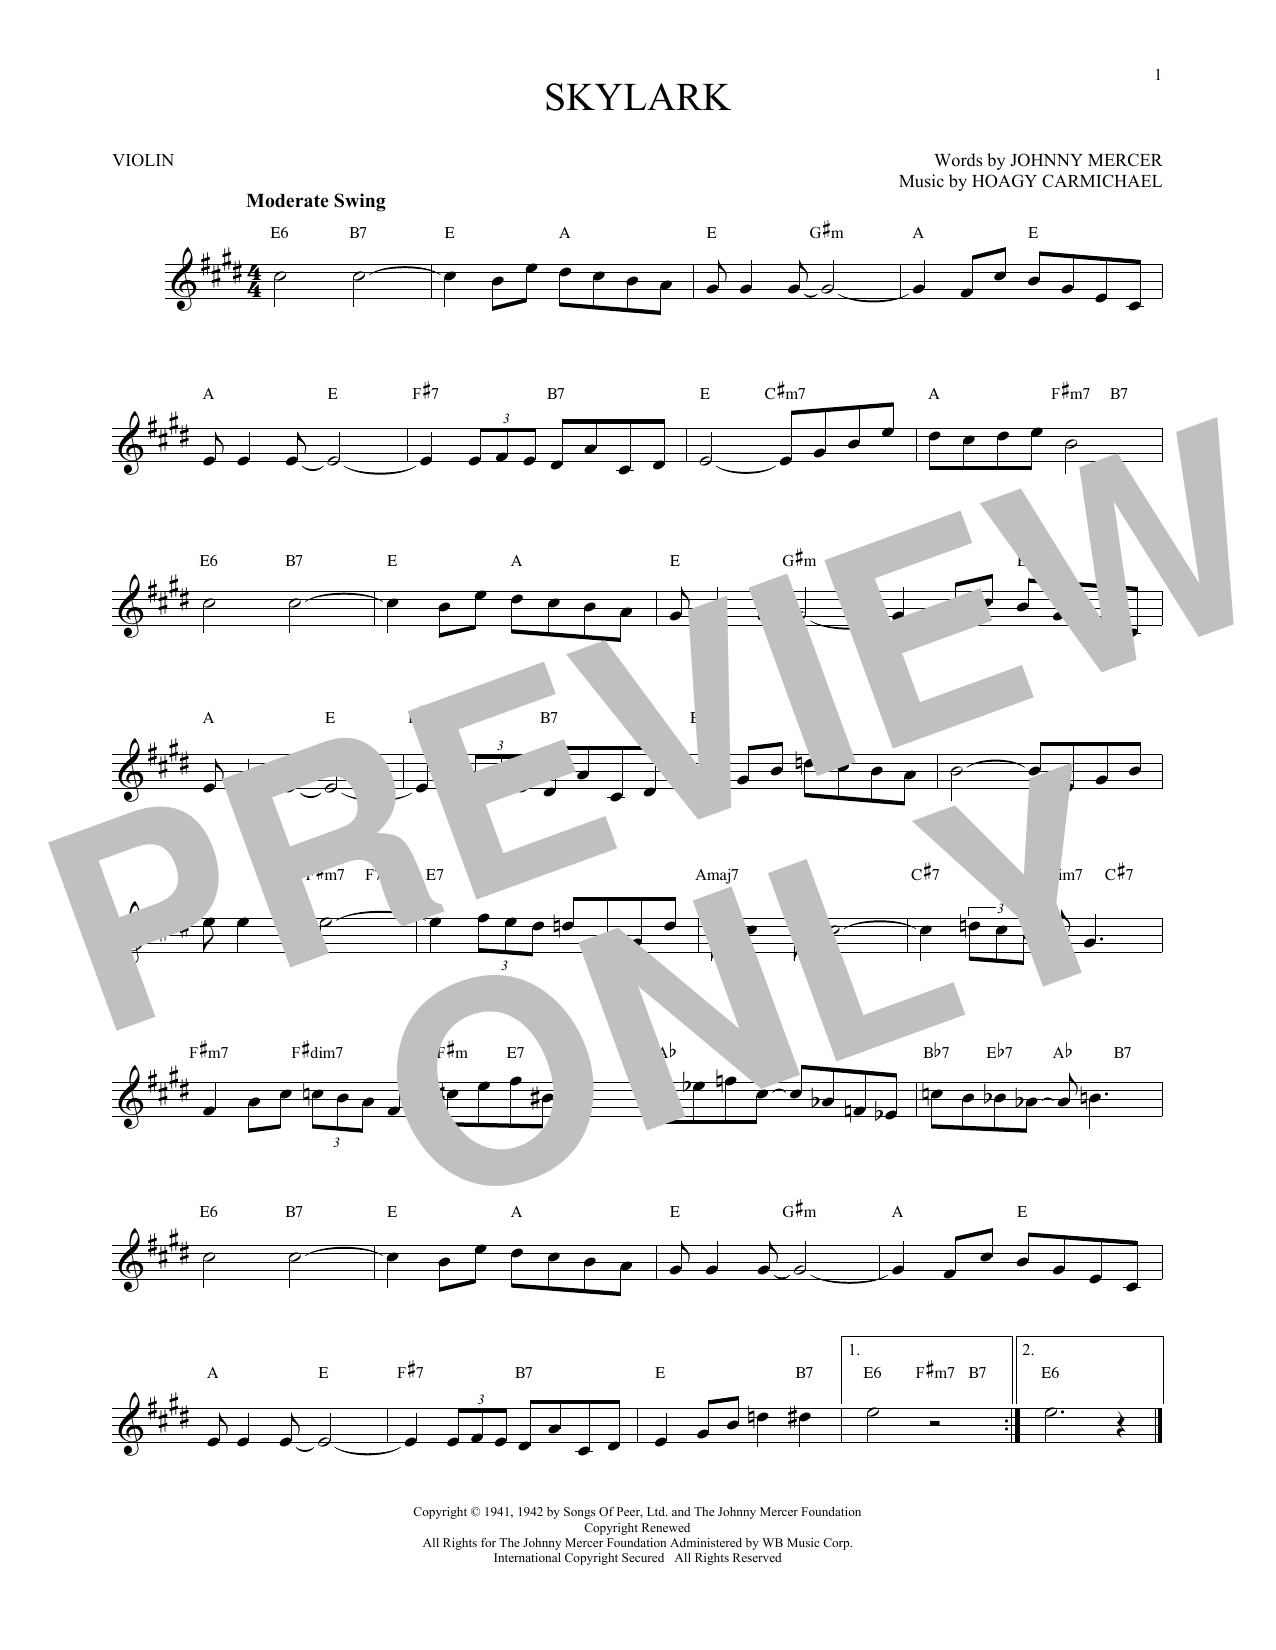 Hoagy Carmichael Skylark sheet music notes and chords. Download Printable PDF.